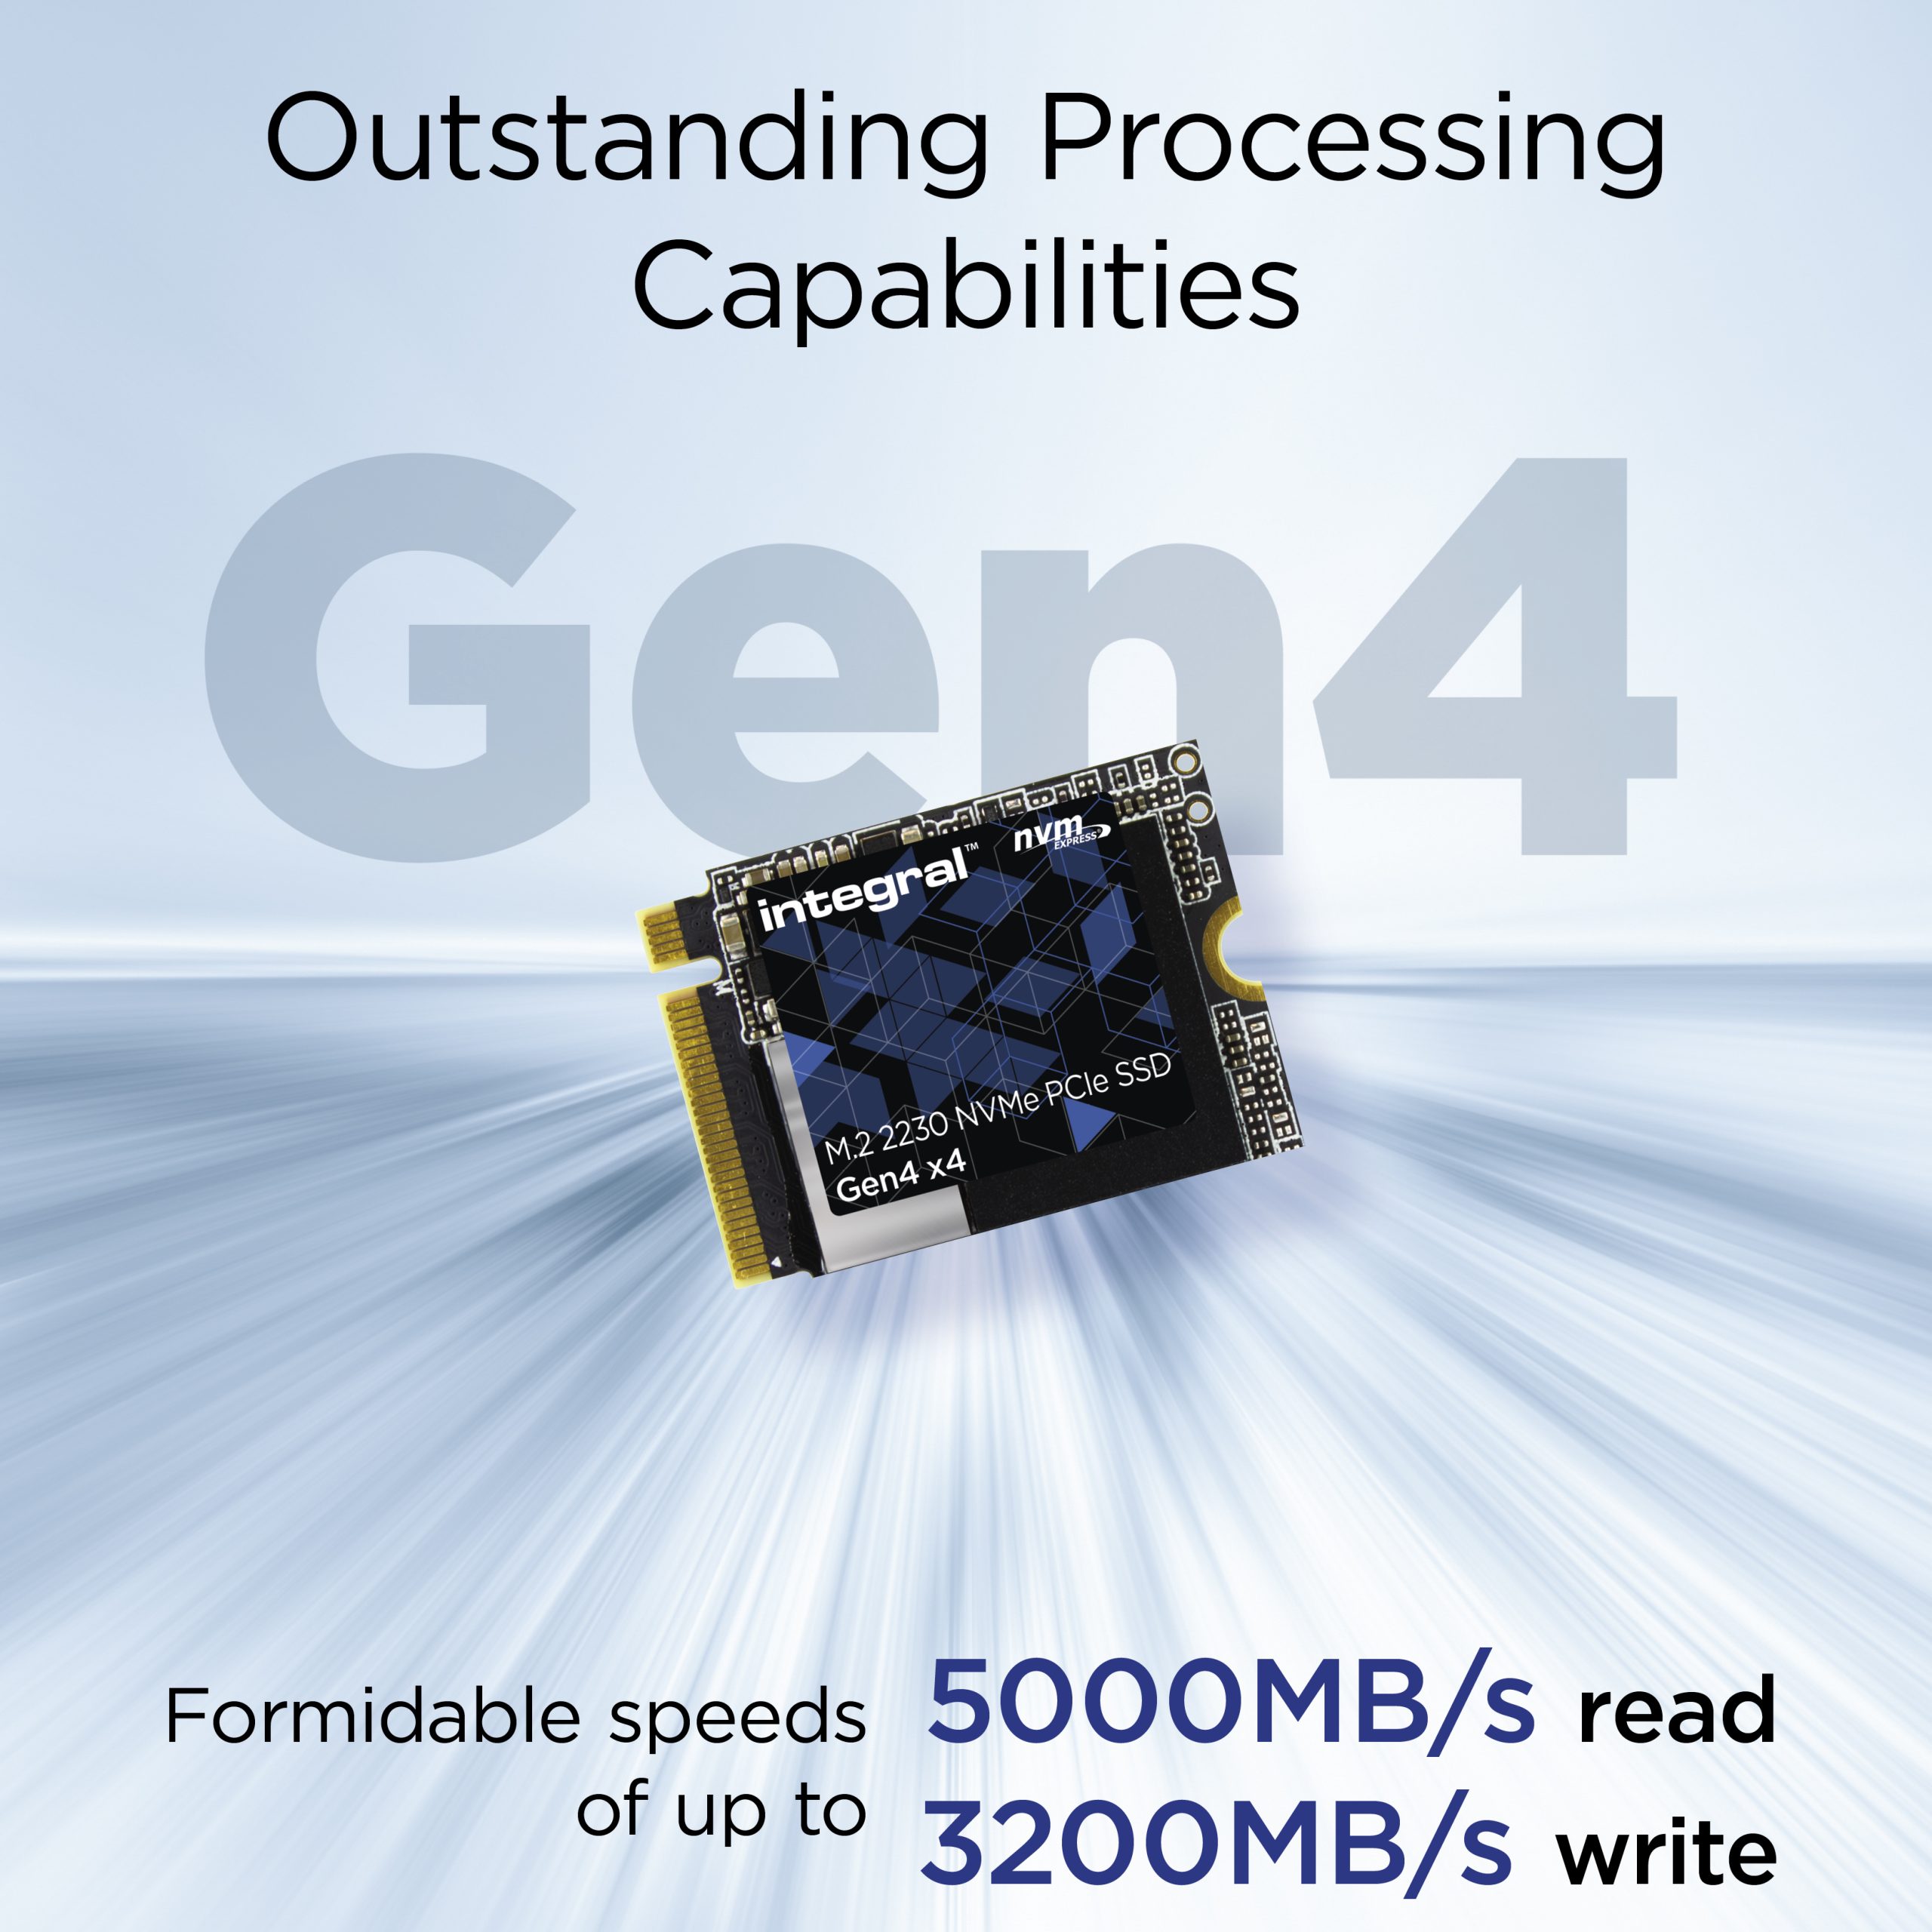 M.2 2230 SSD Gen3 Speeds up to 5000MB/s and up to 3200MB/s write speeds